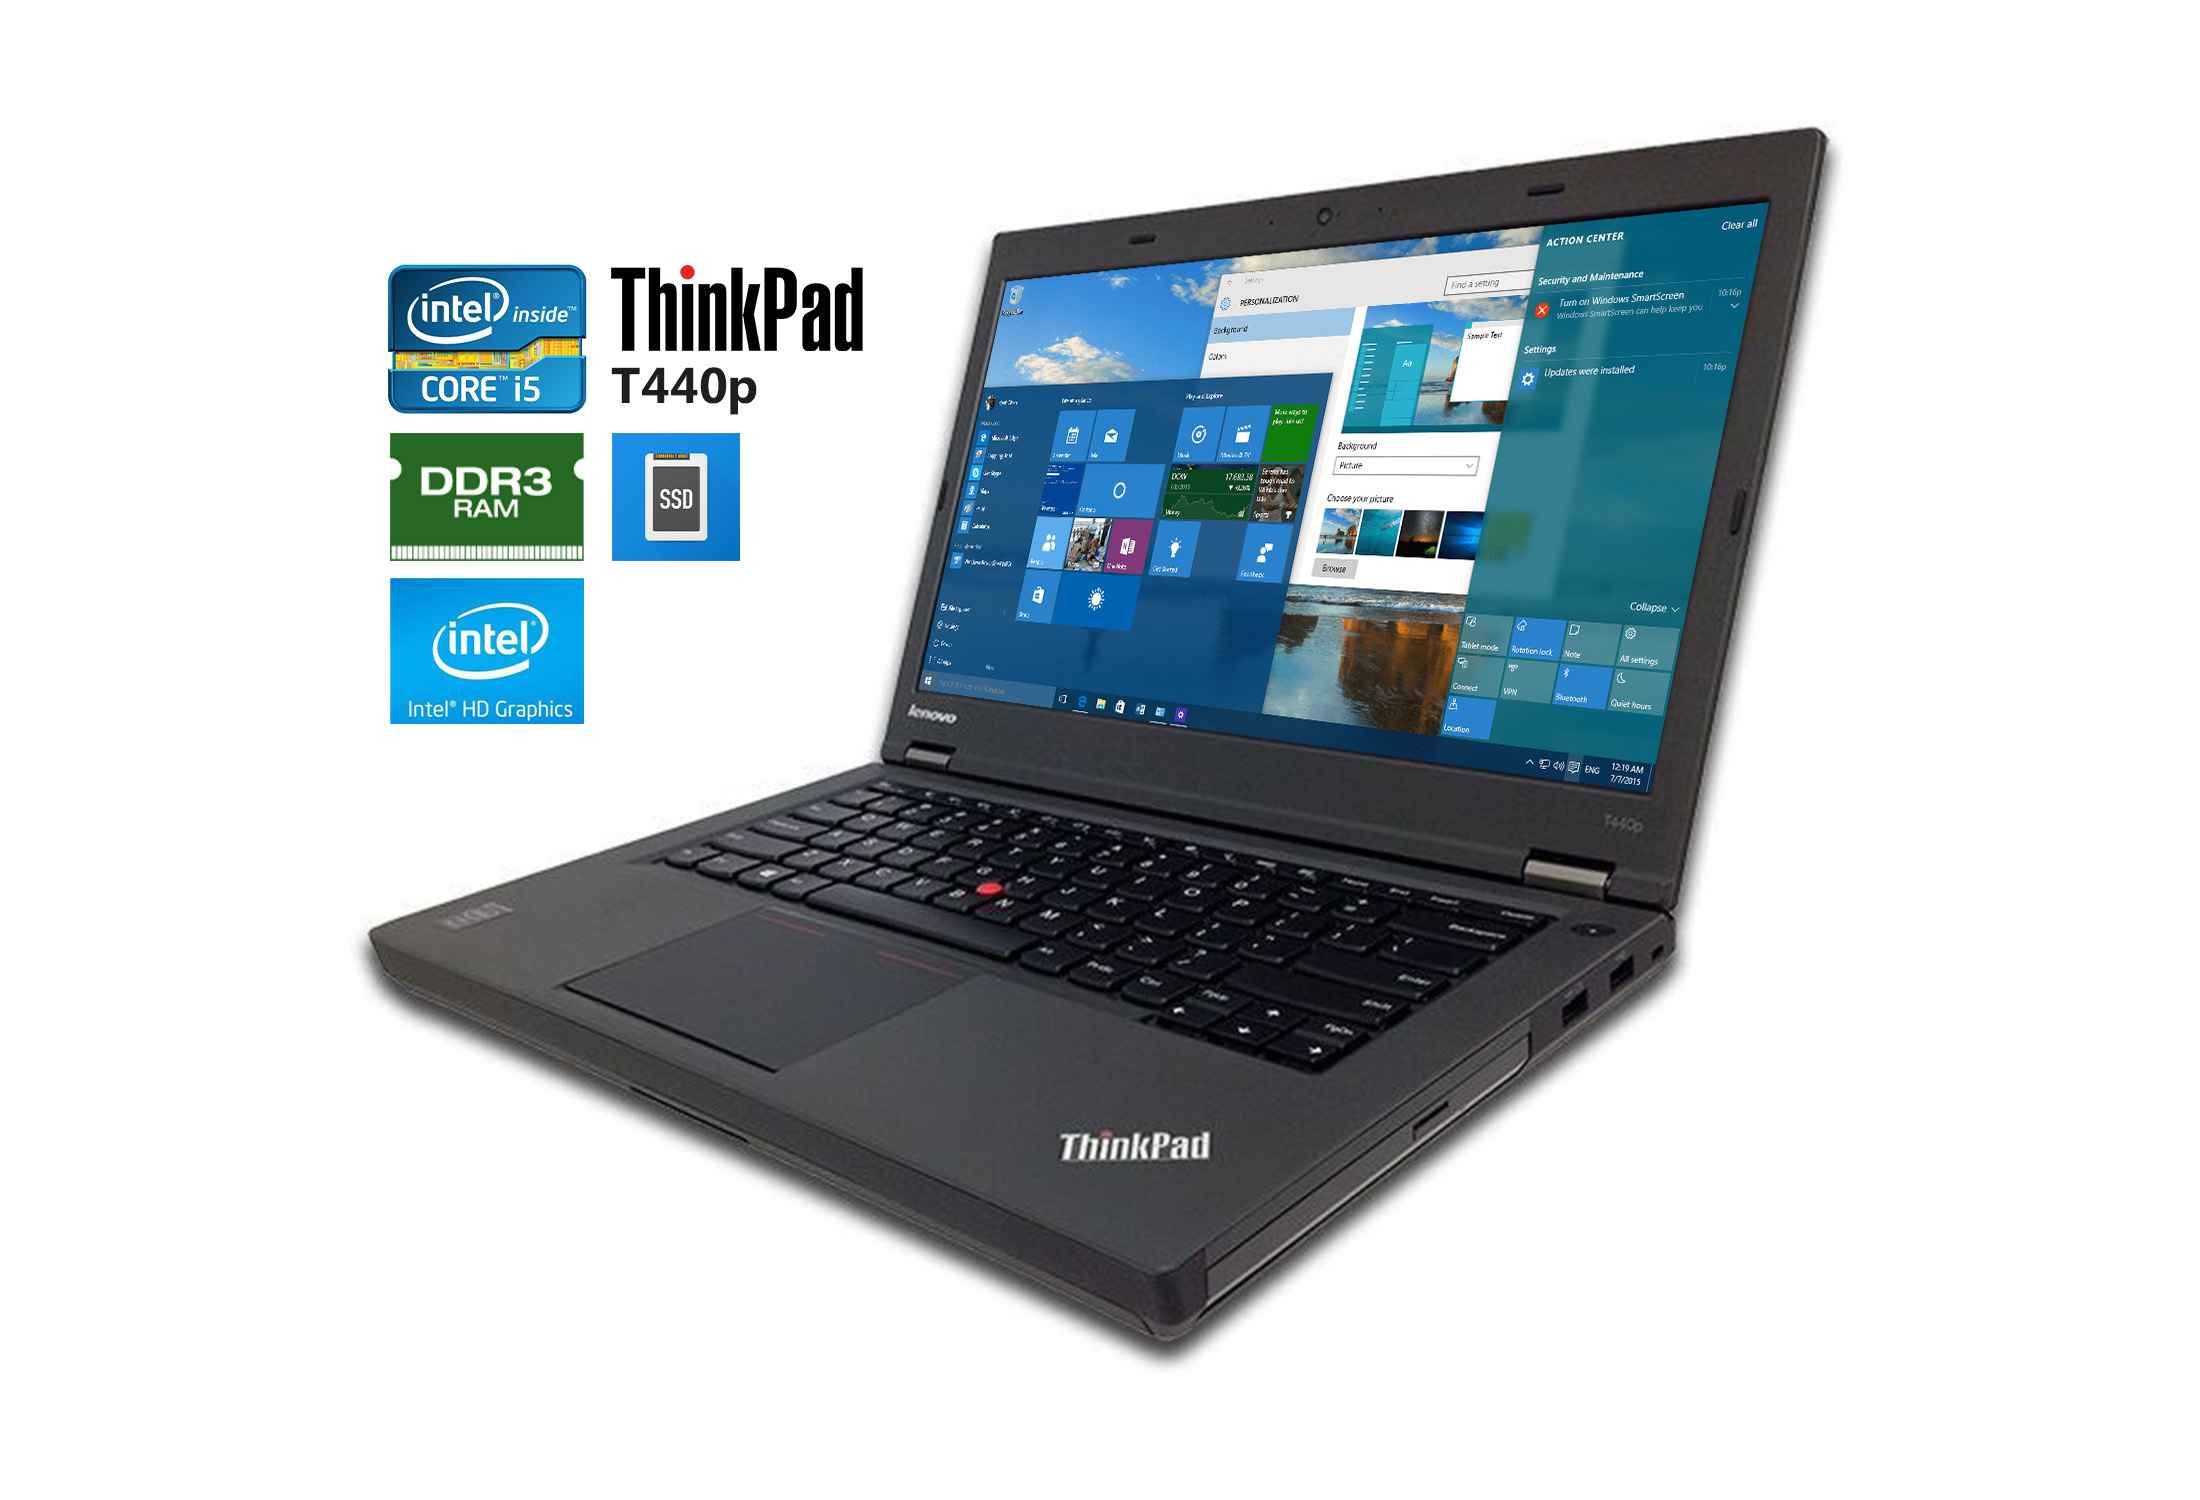 Lenovo Thinkpad T440p i5-4300M HD Graphics 4400 Camera-IZNkL.jpeg